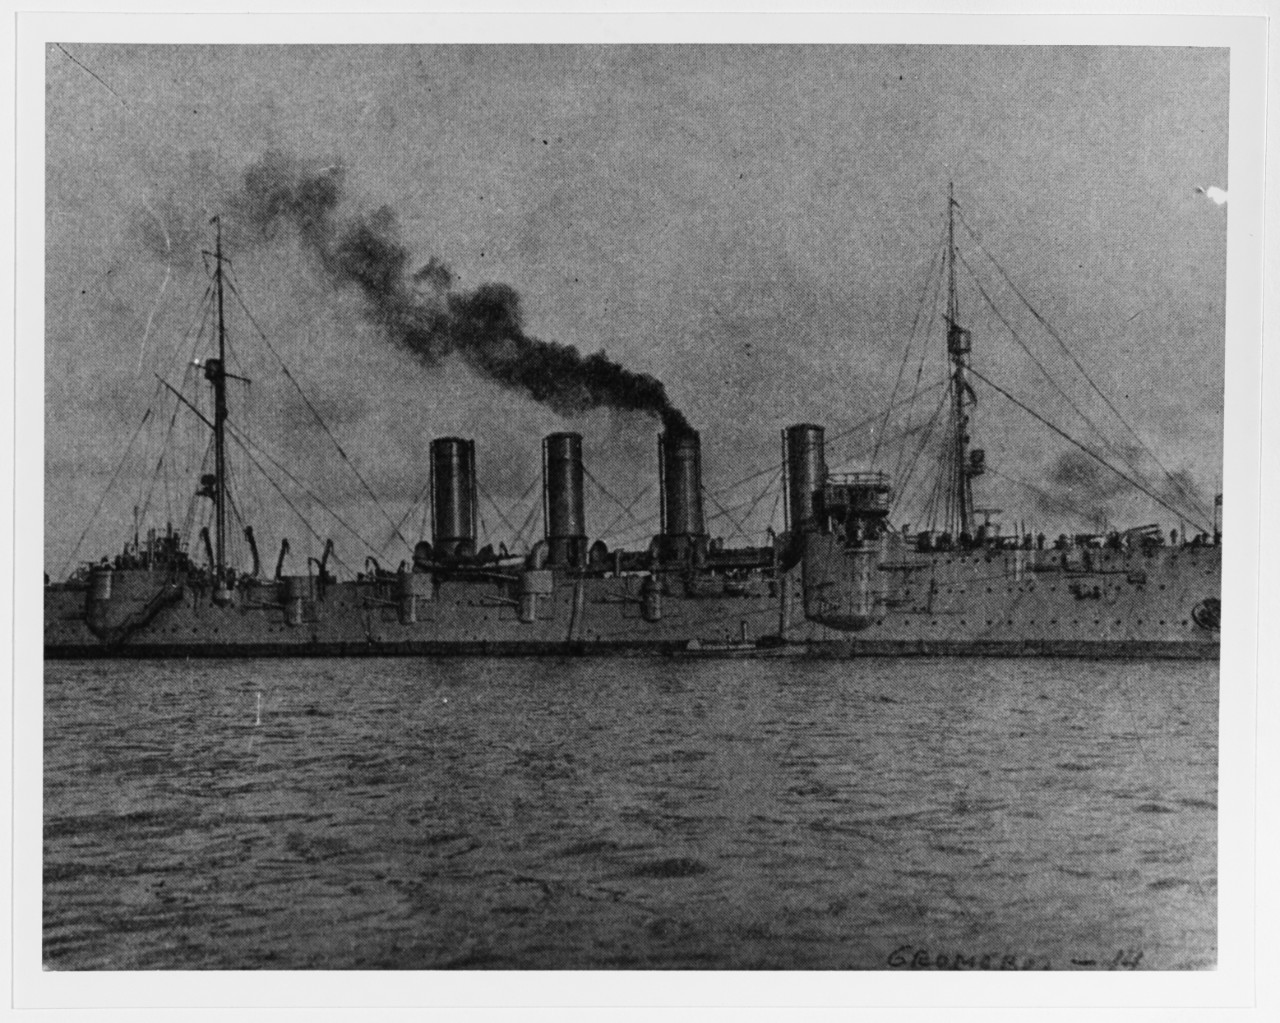 GROMOBOI (Russian armored cruiser, 1899-1922)